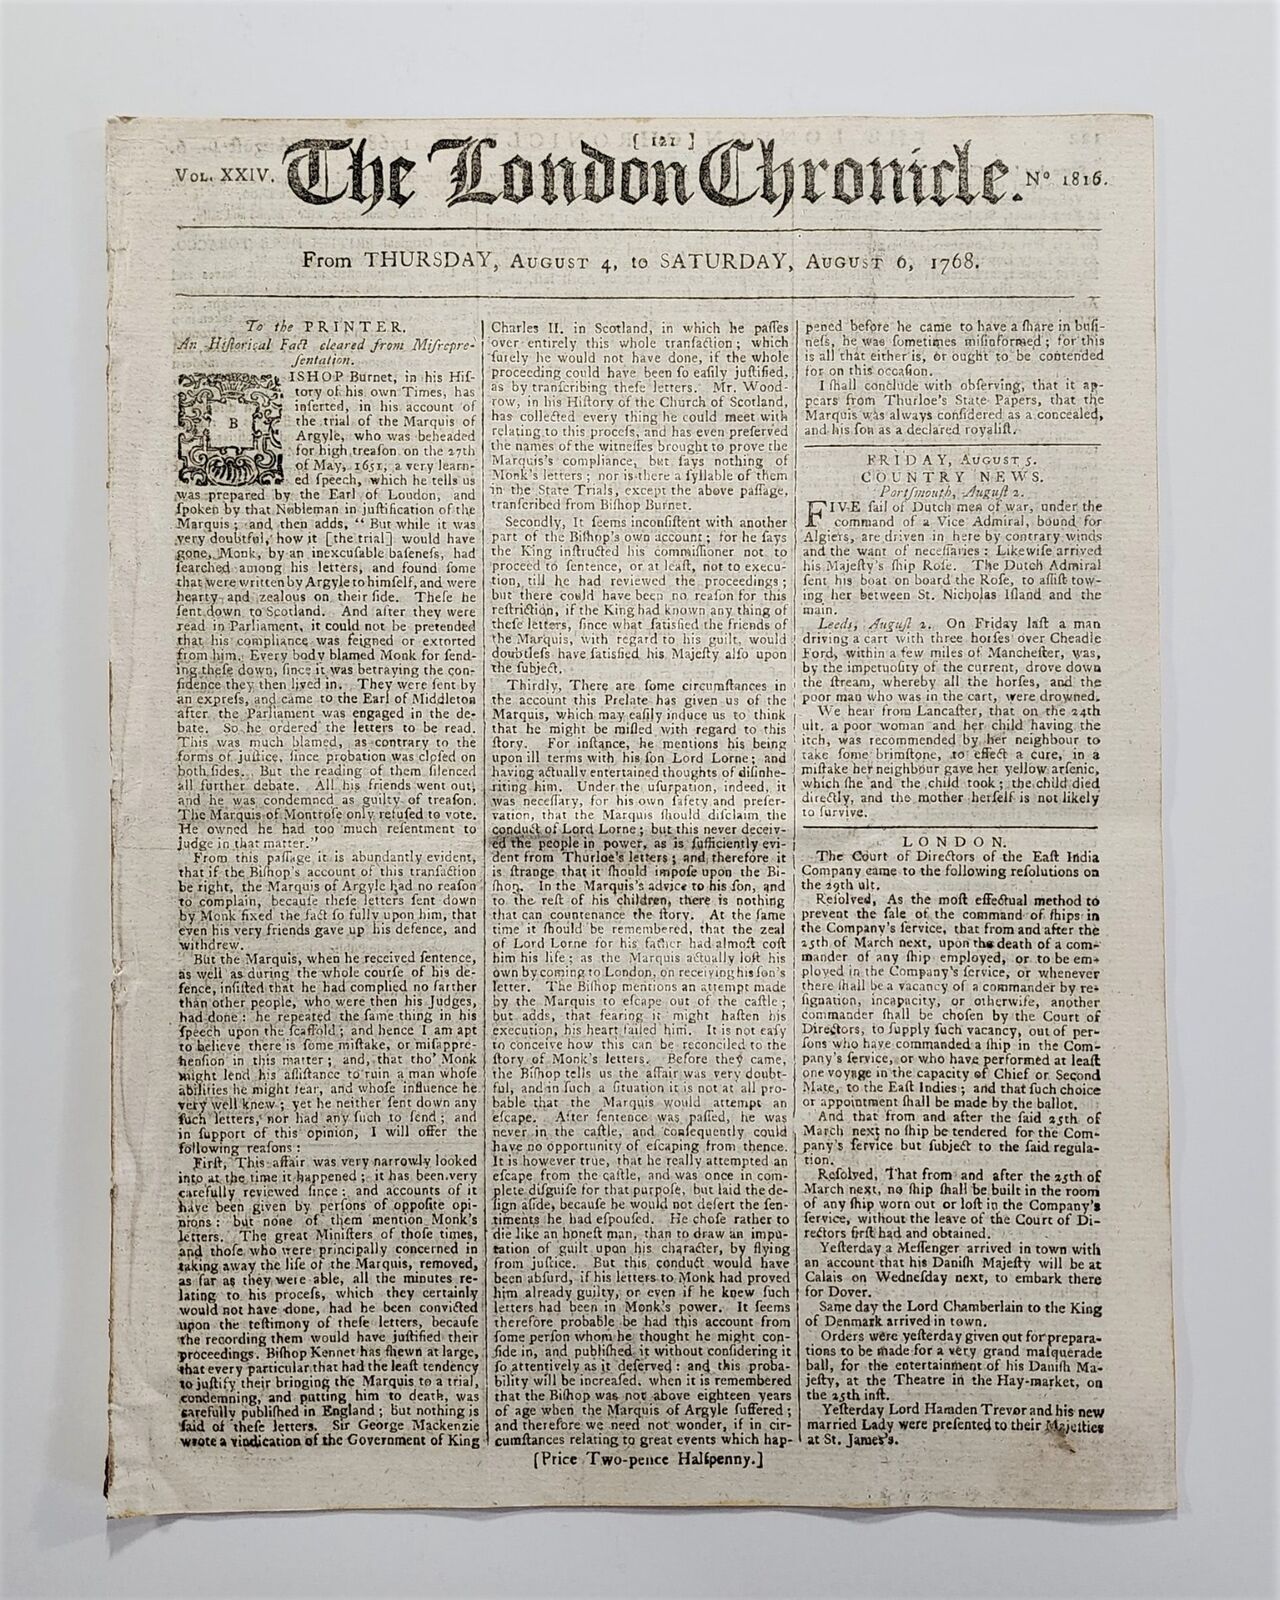 Aug. 4-6, 1768 The London Chronicle Vol. XXIV No. 1816 Newspaper